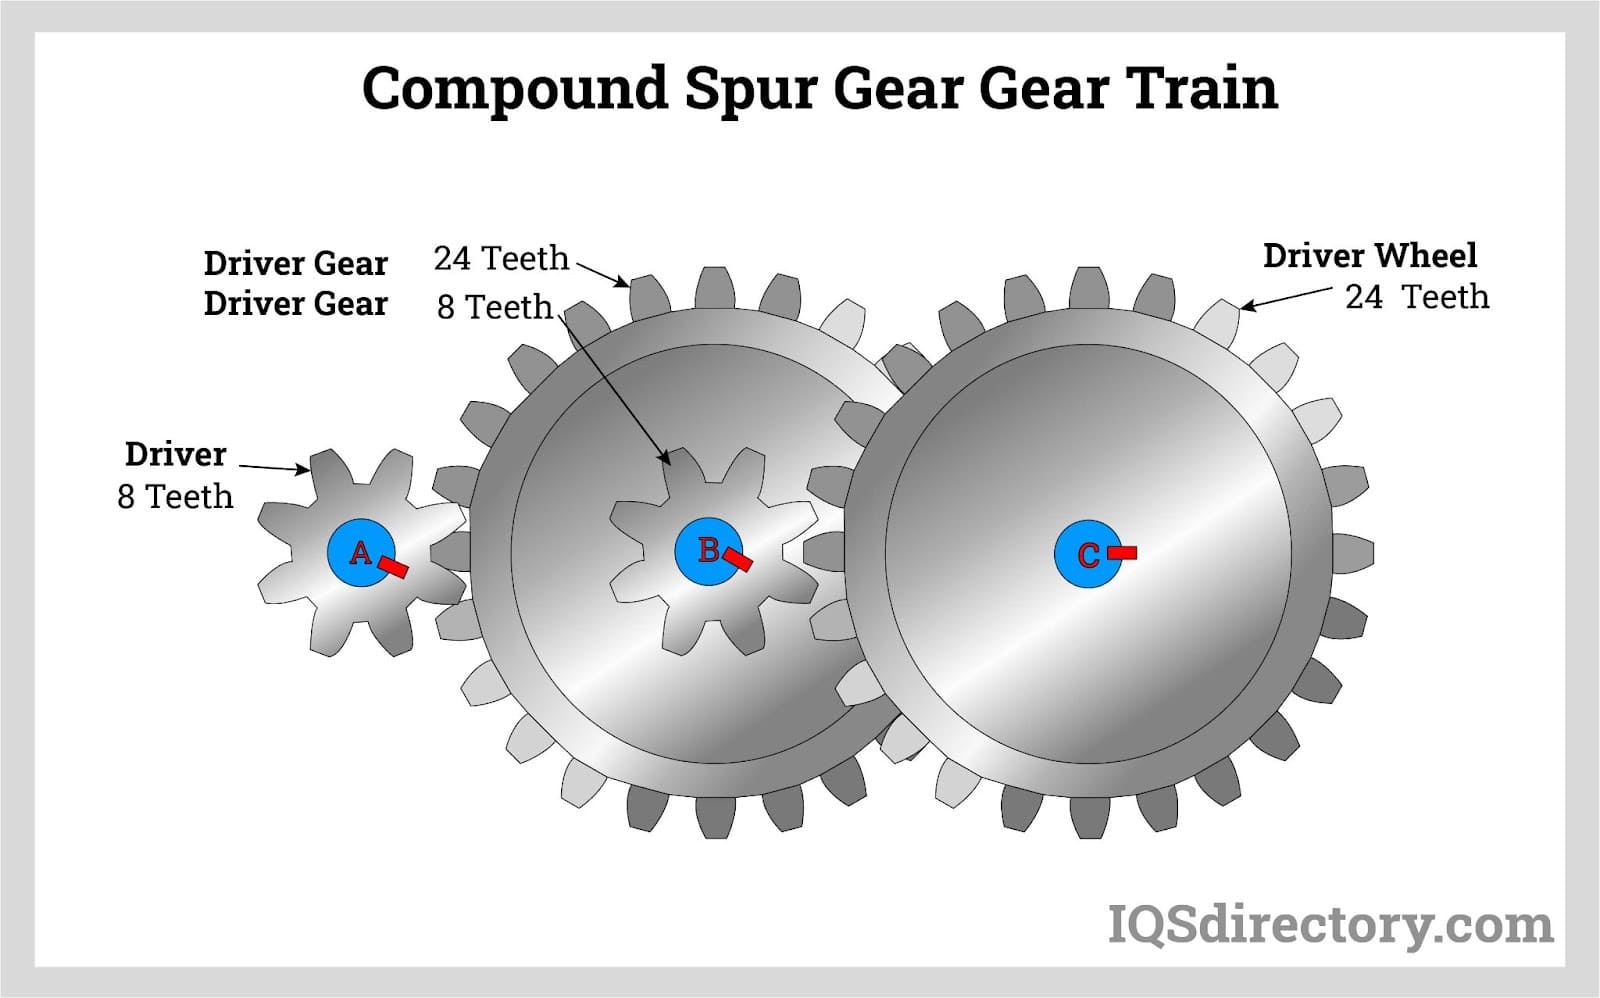 Compound Spur Gear Gear Train